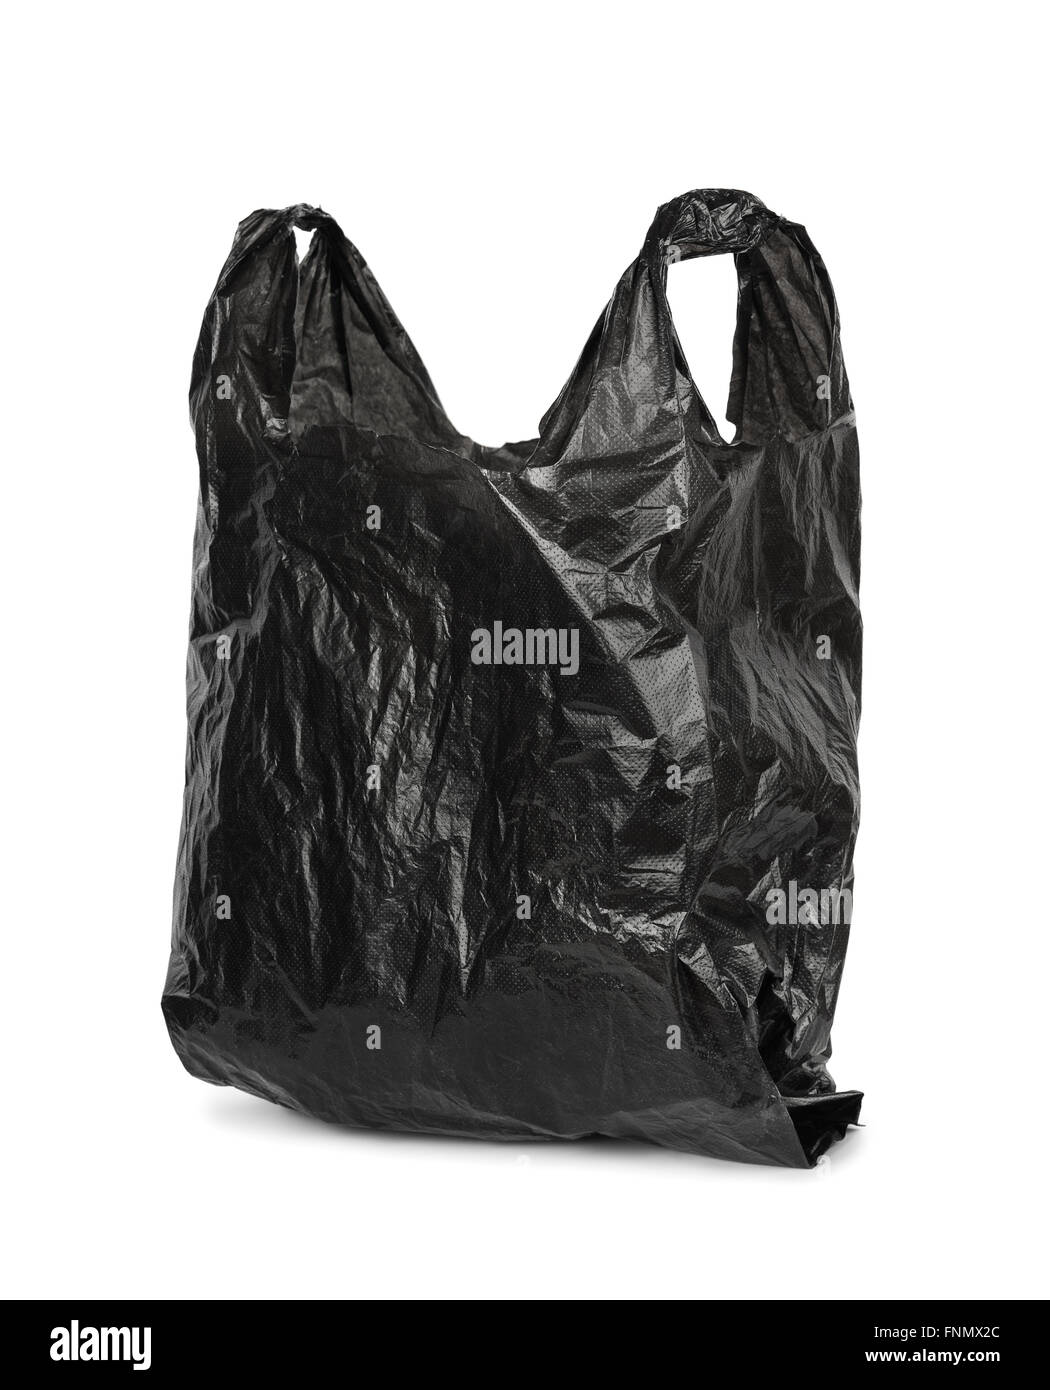 Bolsa de plástico negro fotografías e imágenes de alta resolución - Alamy